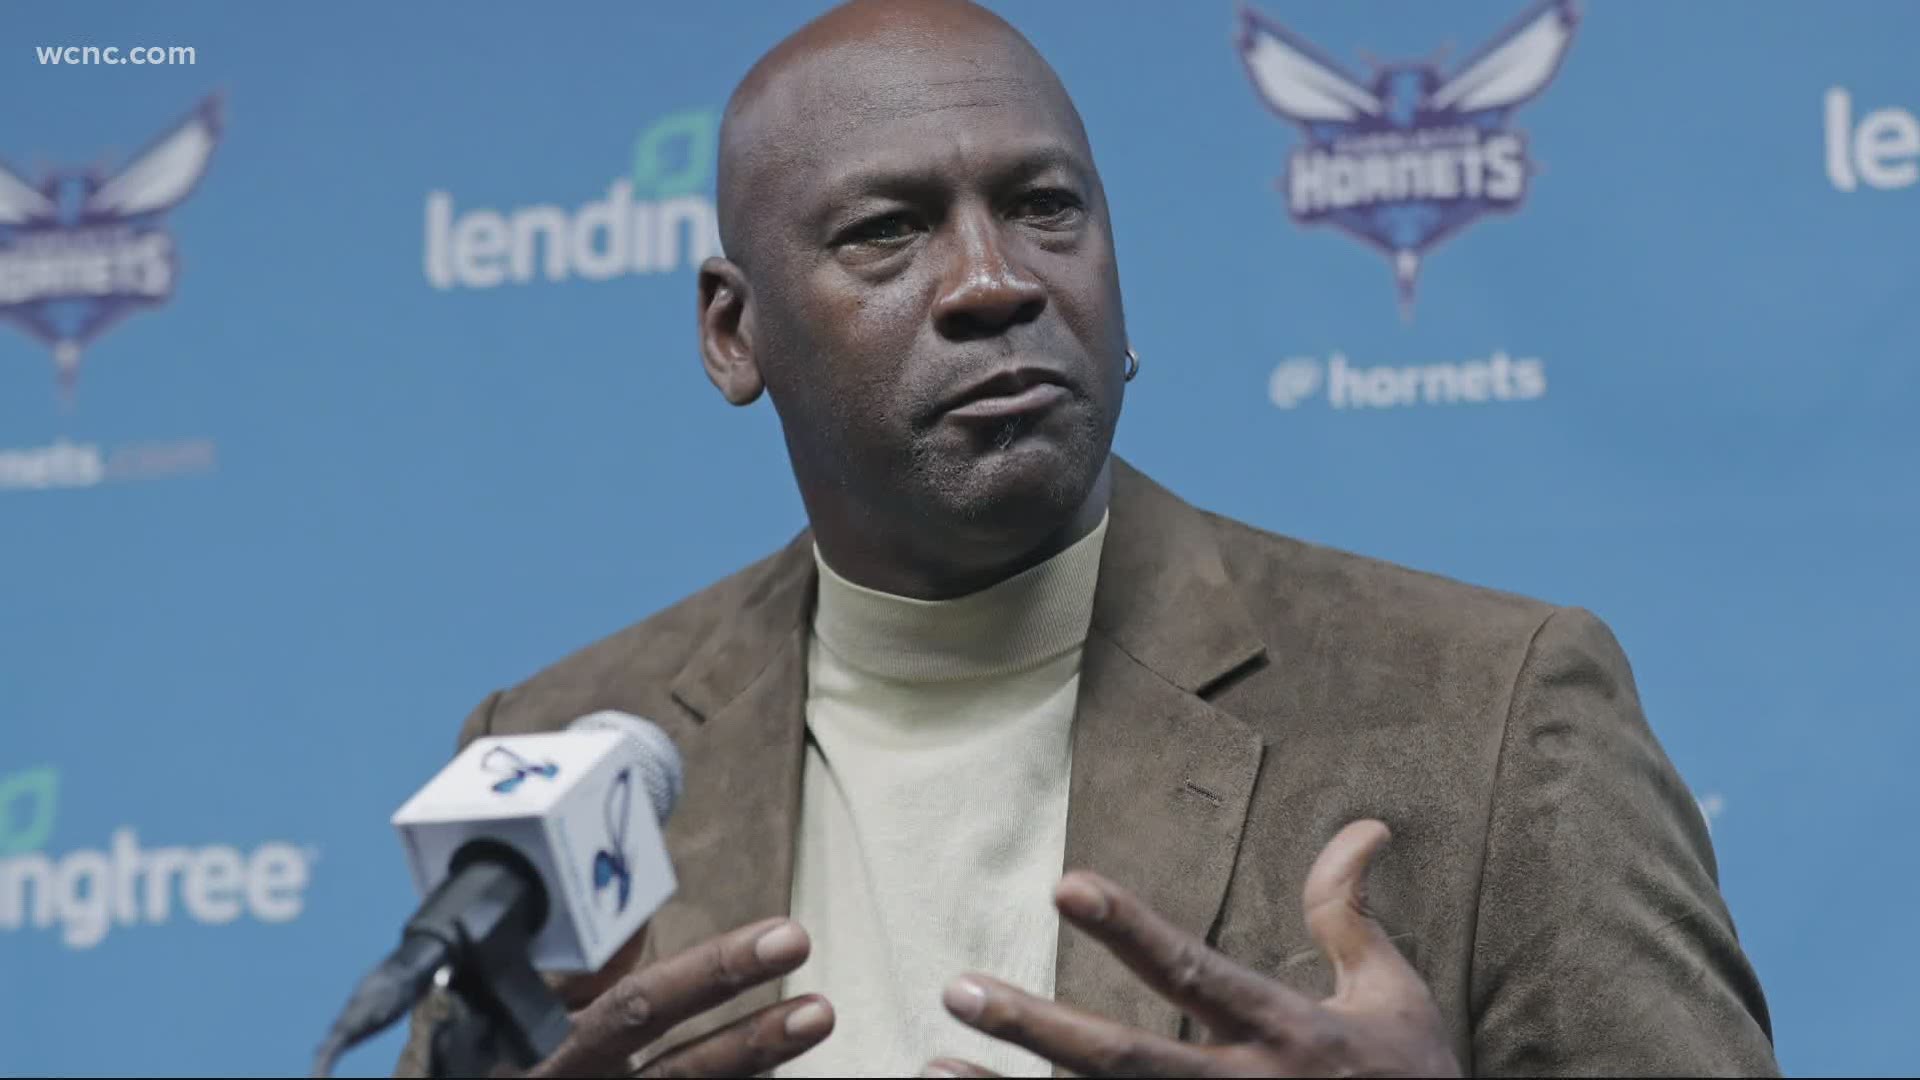 Can Michael Jordan turn around his legacy bad team | wcnc.com